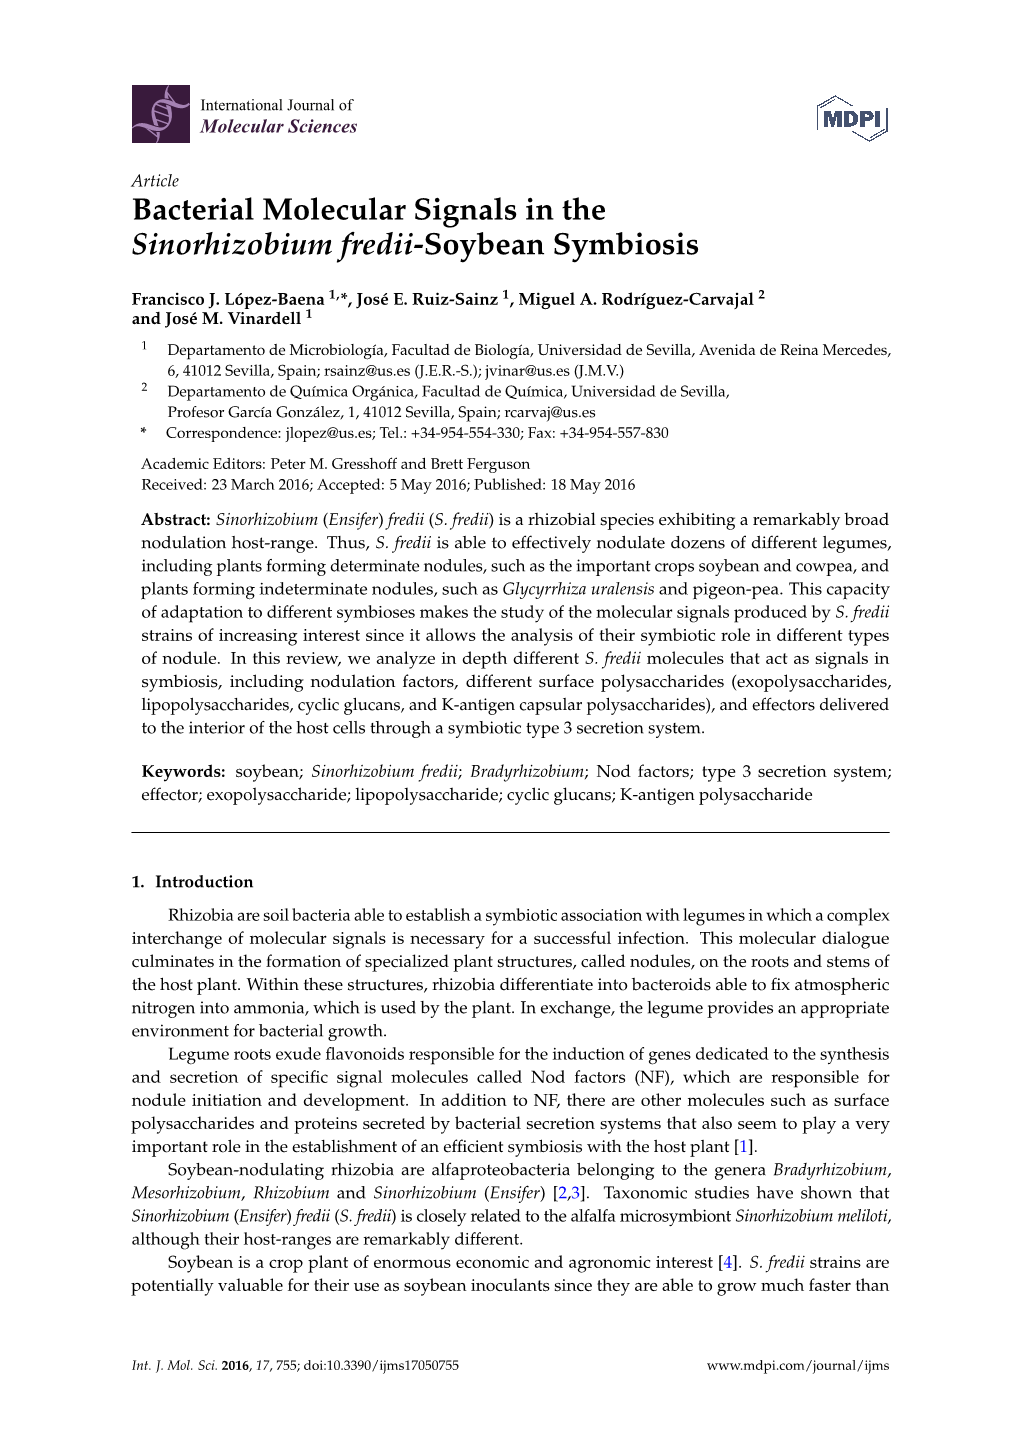 Bacterial Molecular Signals in the Sinorhizobium Fredii-Soybean Symbiosis